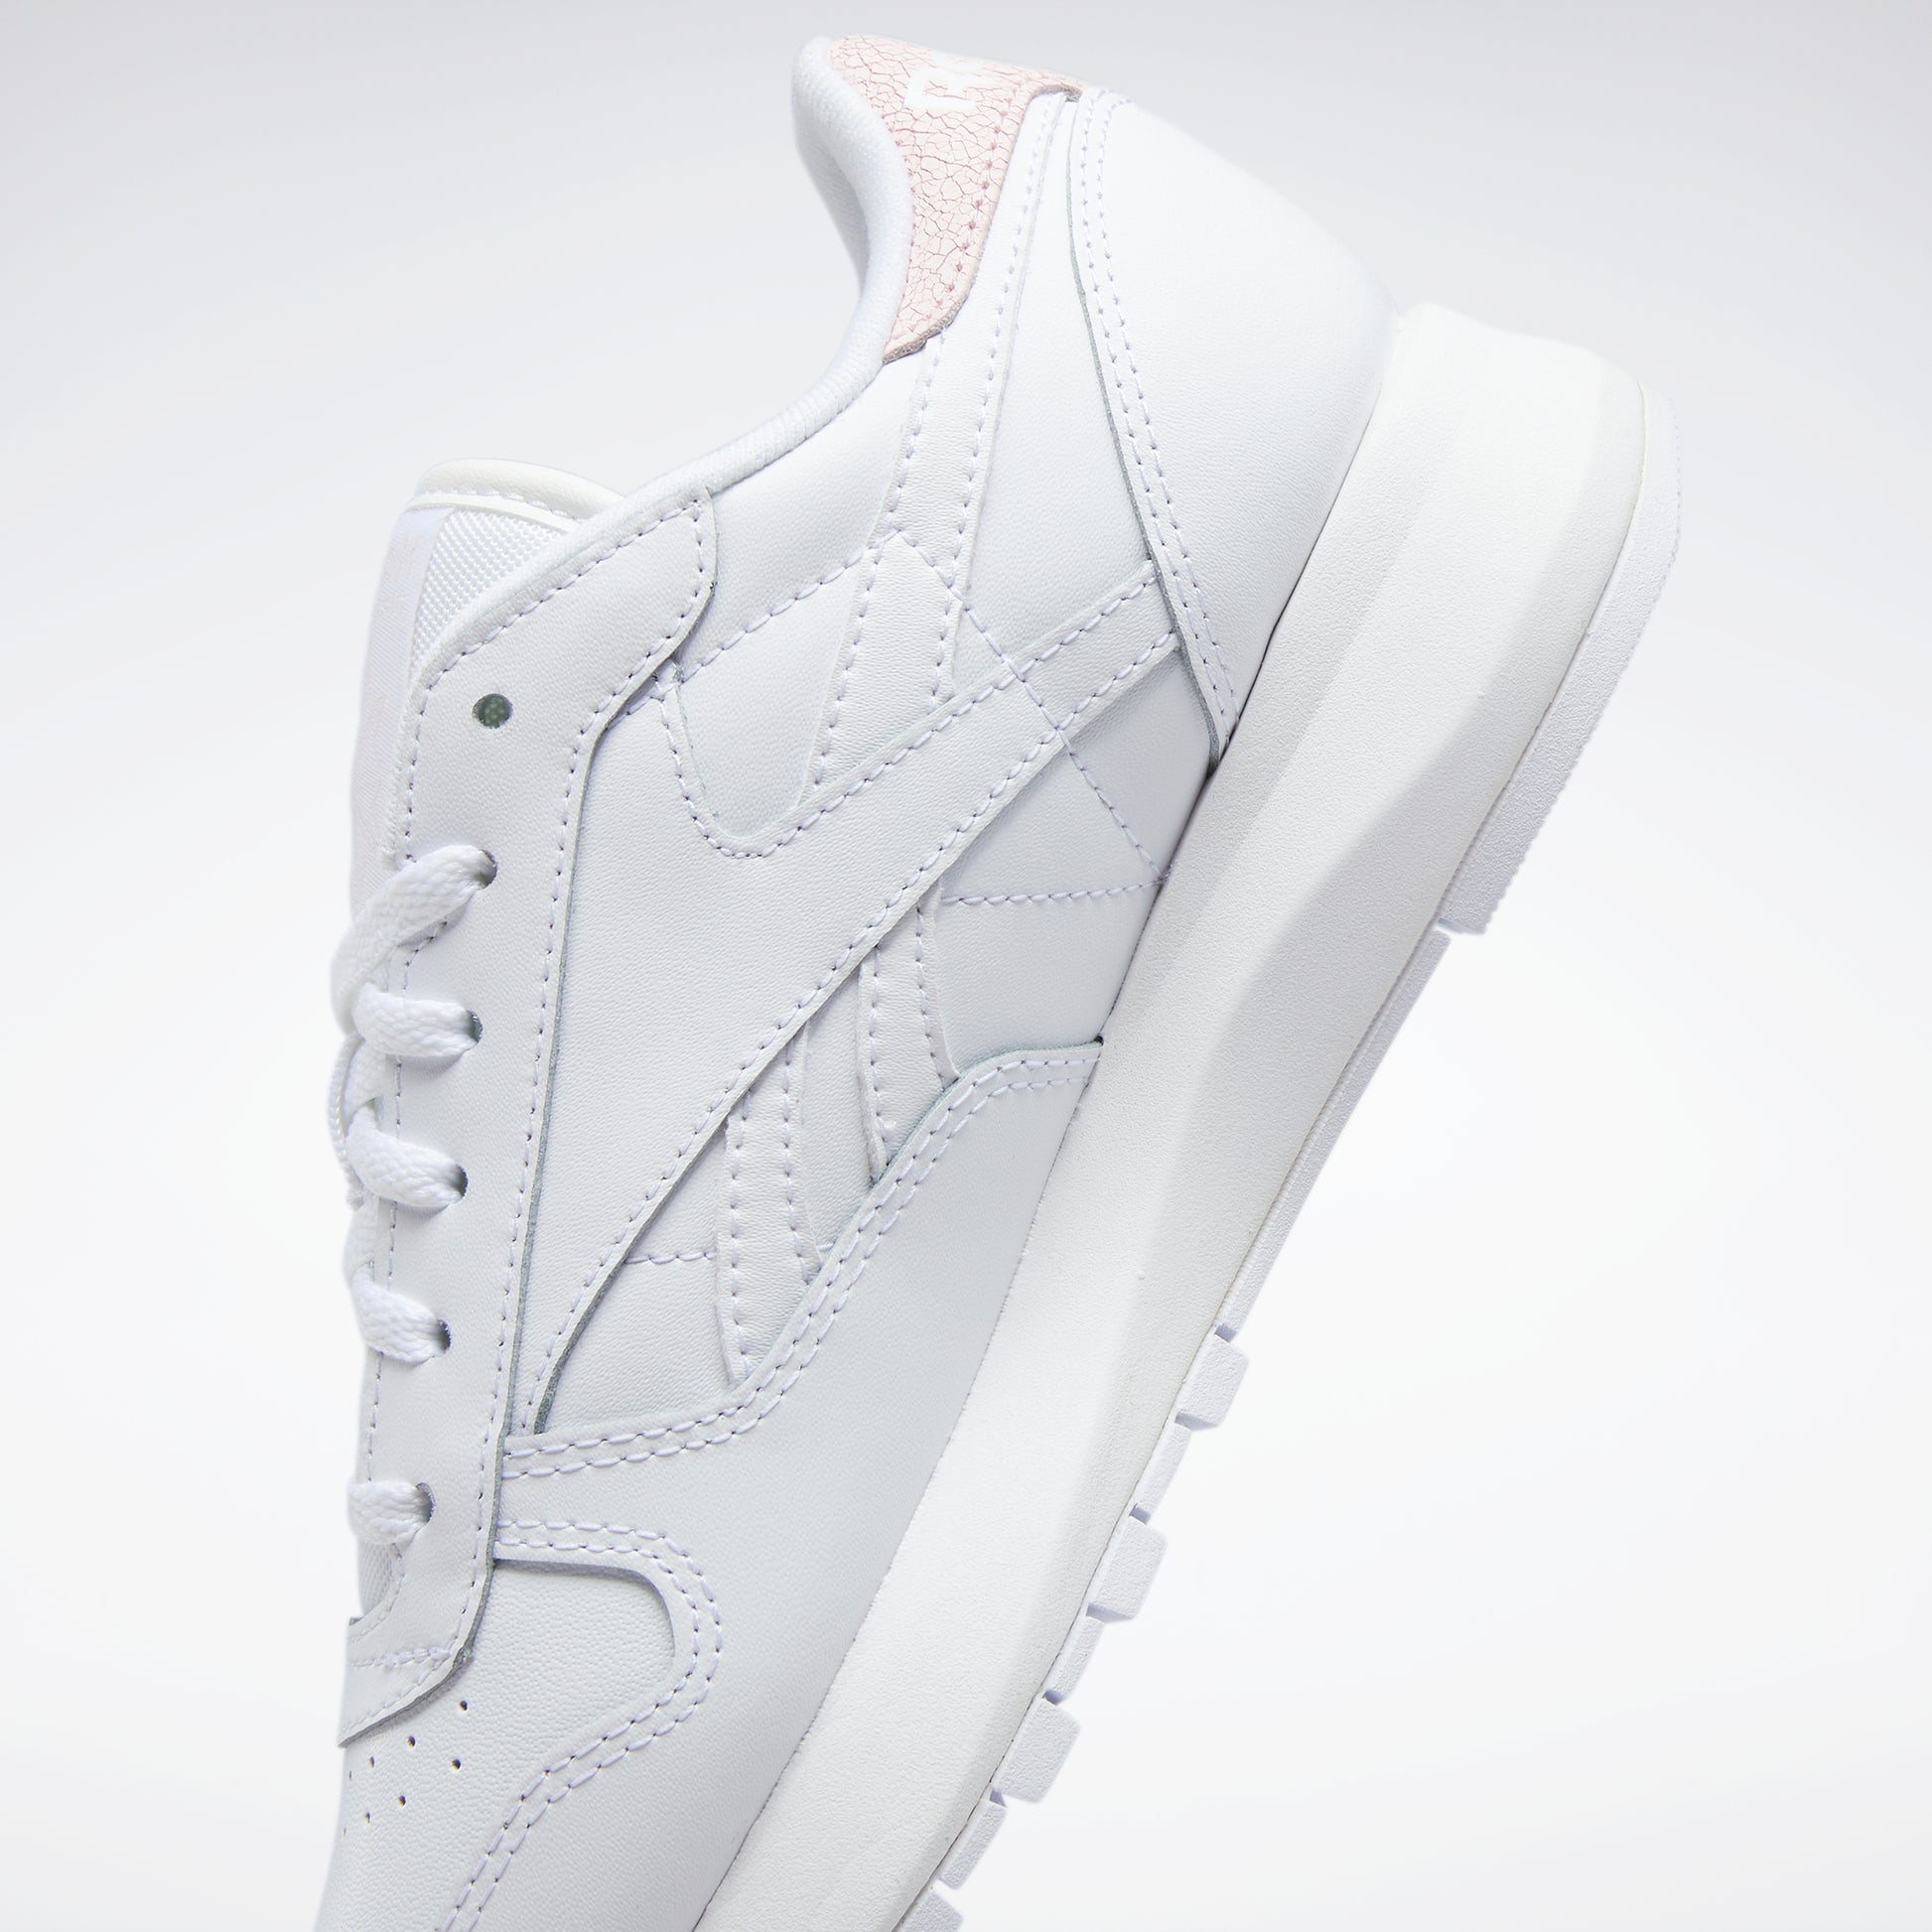 Leather Shoes White/White/Porcelain Pink – Australia